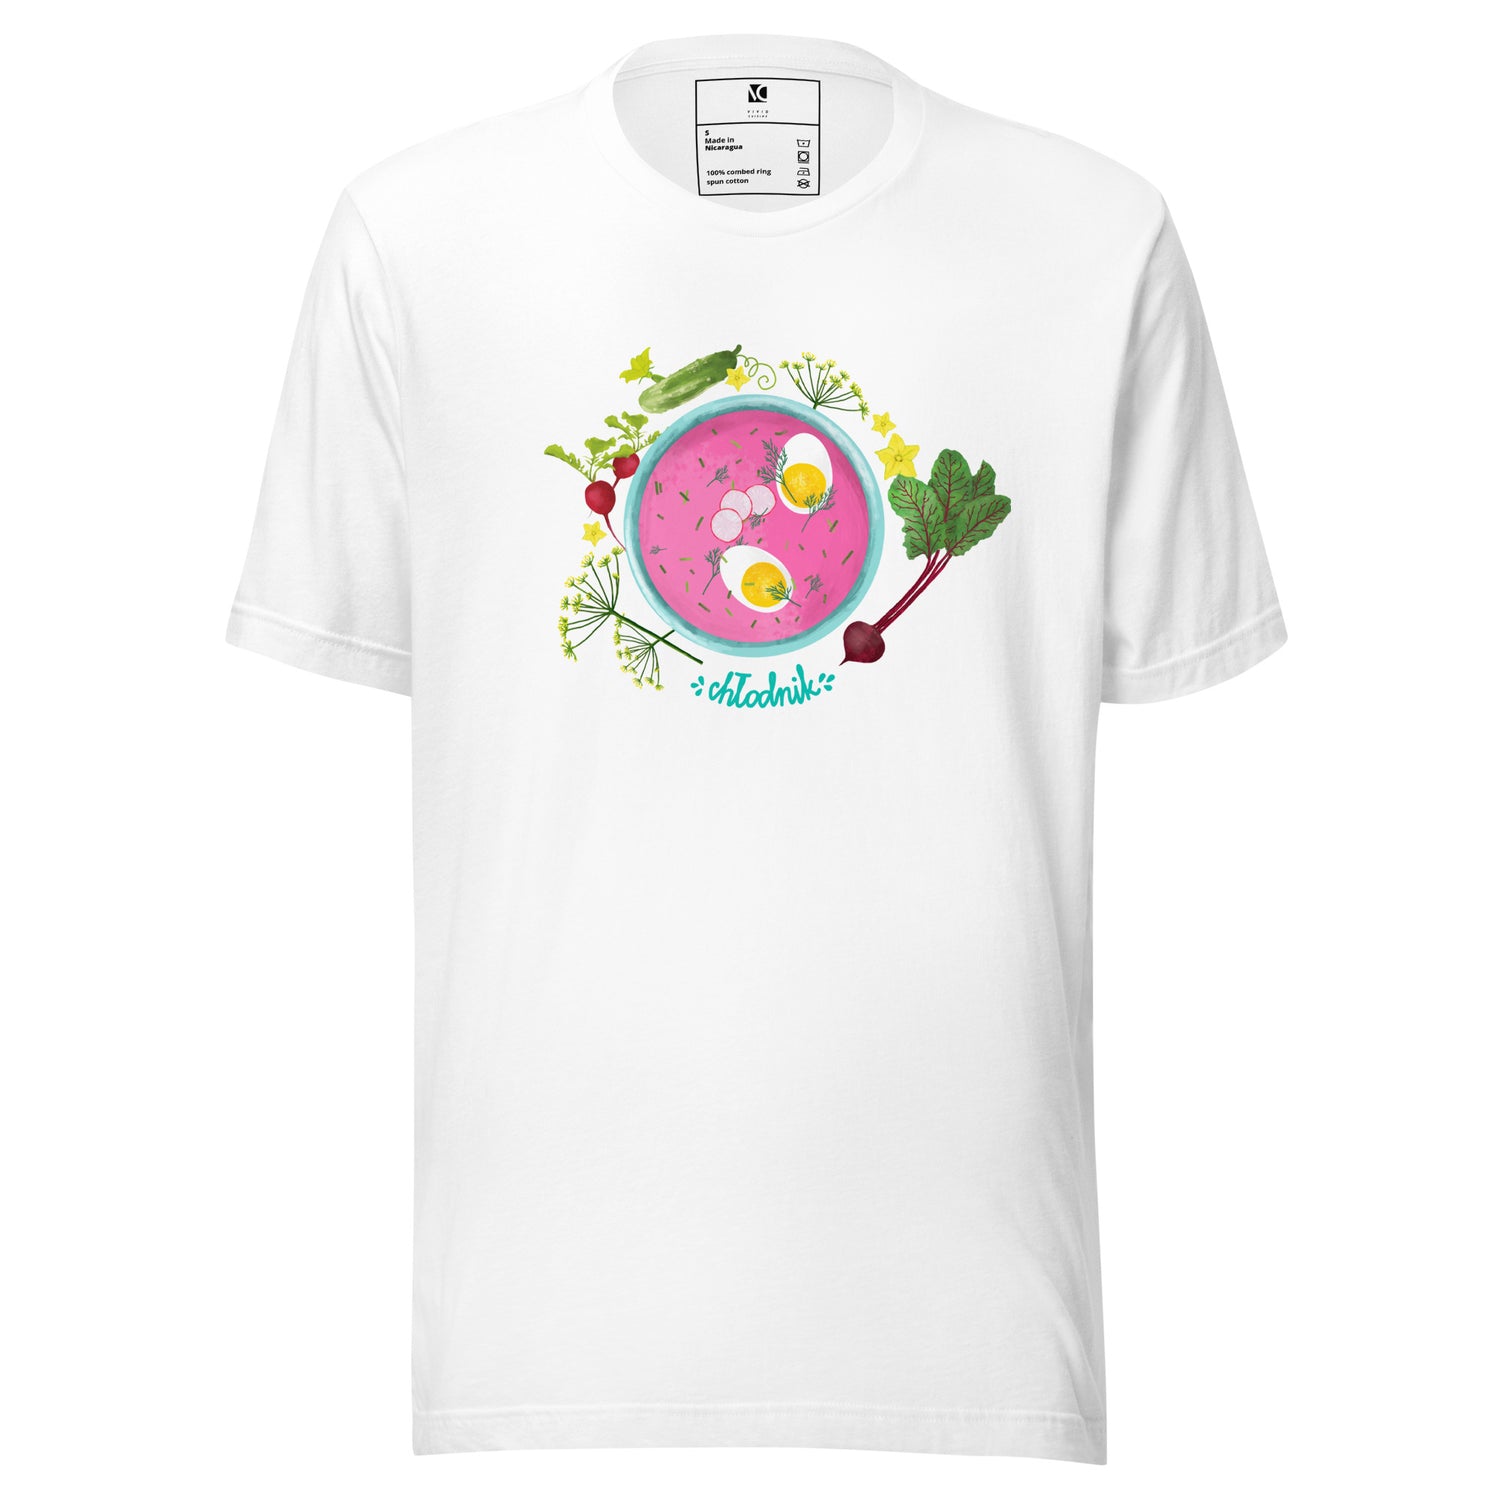 Spring Chłodnik - Unisex T-Shirt